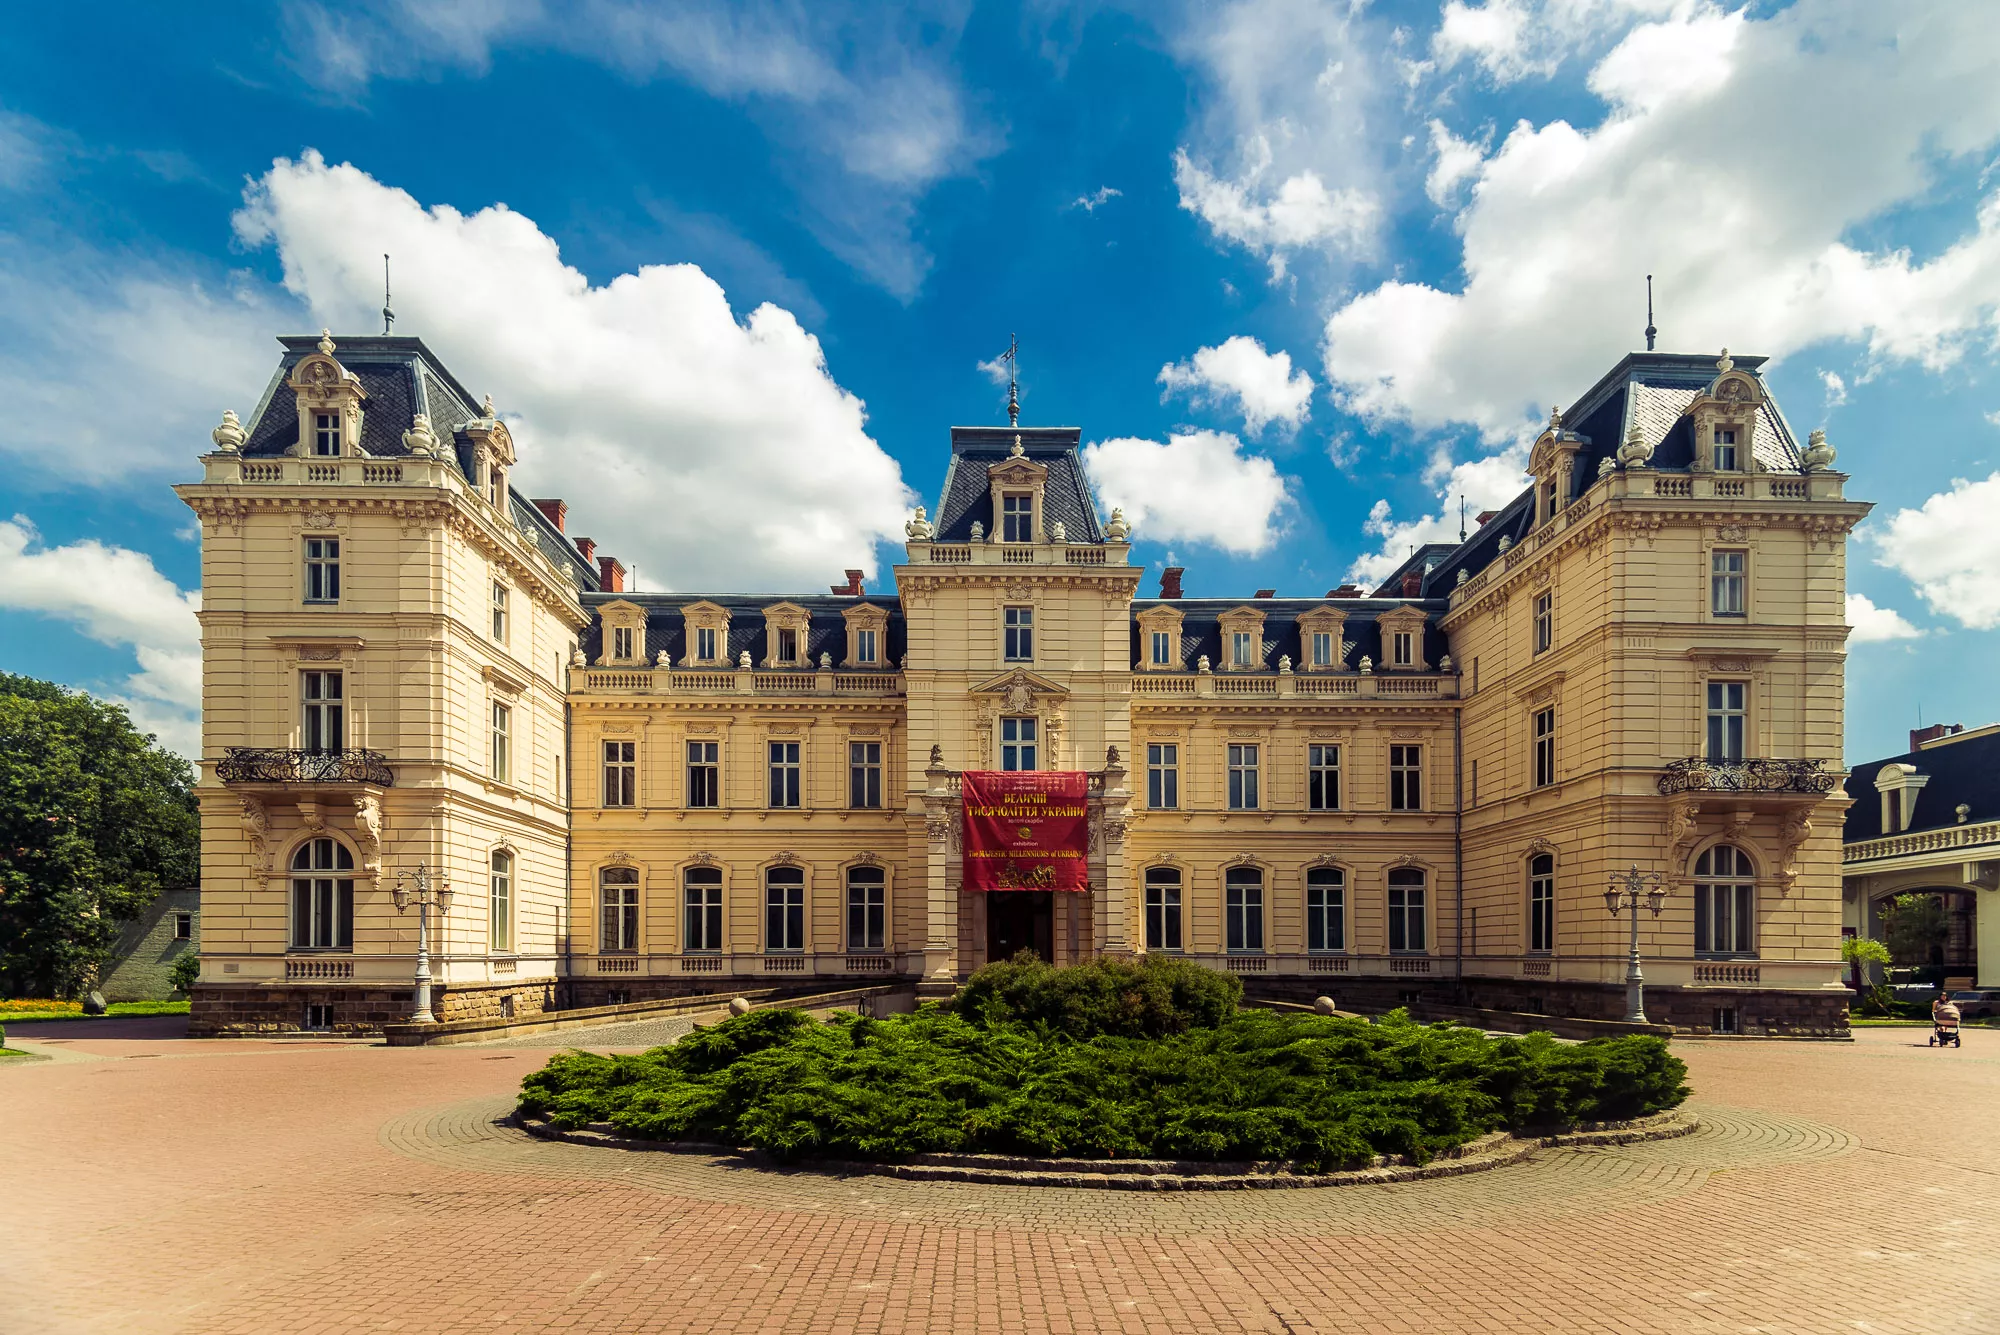 Potocki Palace in Ukraine, Europe | Architecture - Rated 3.8